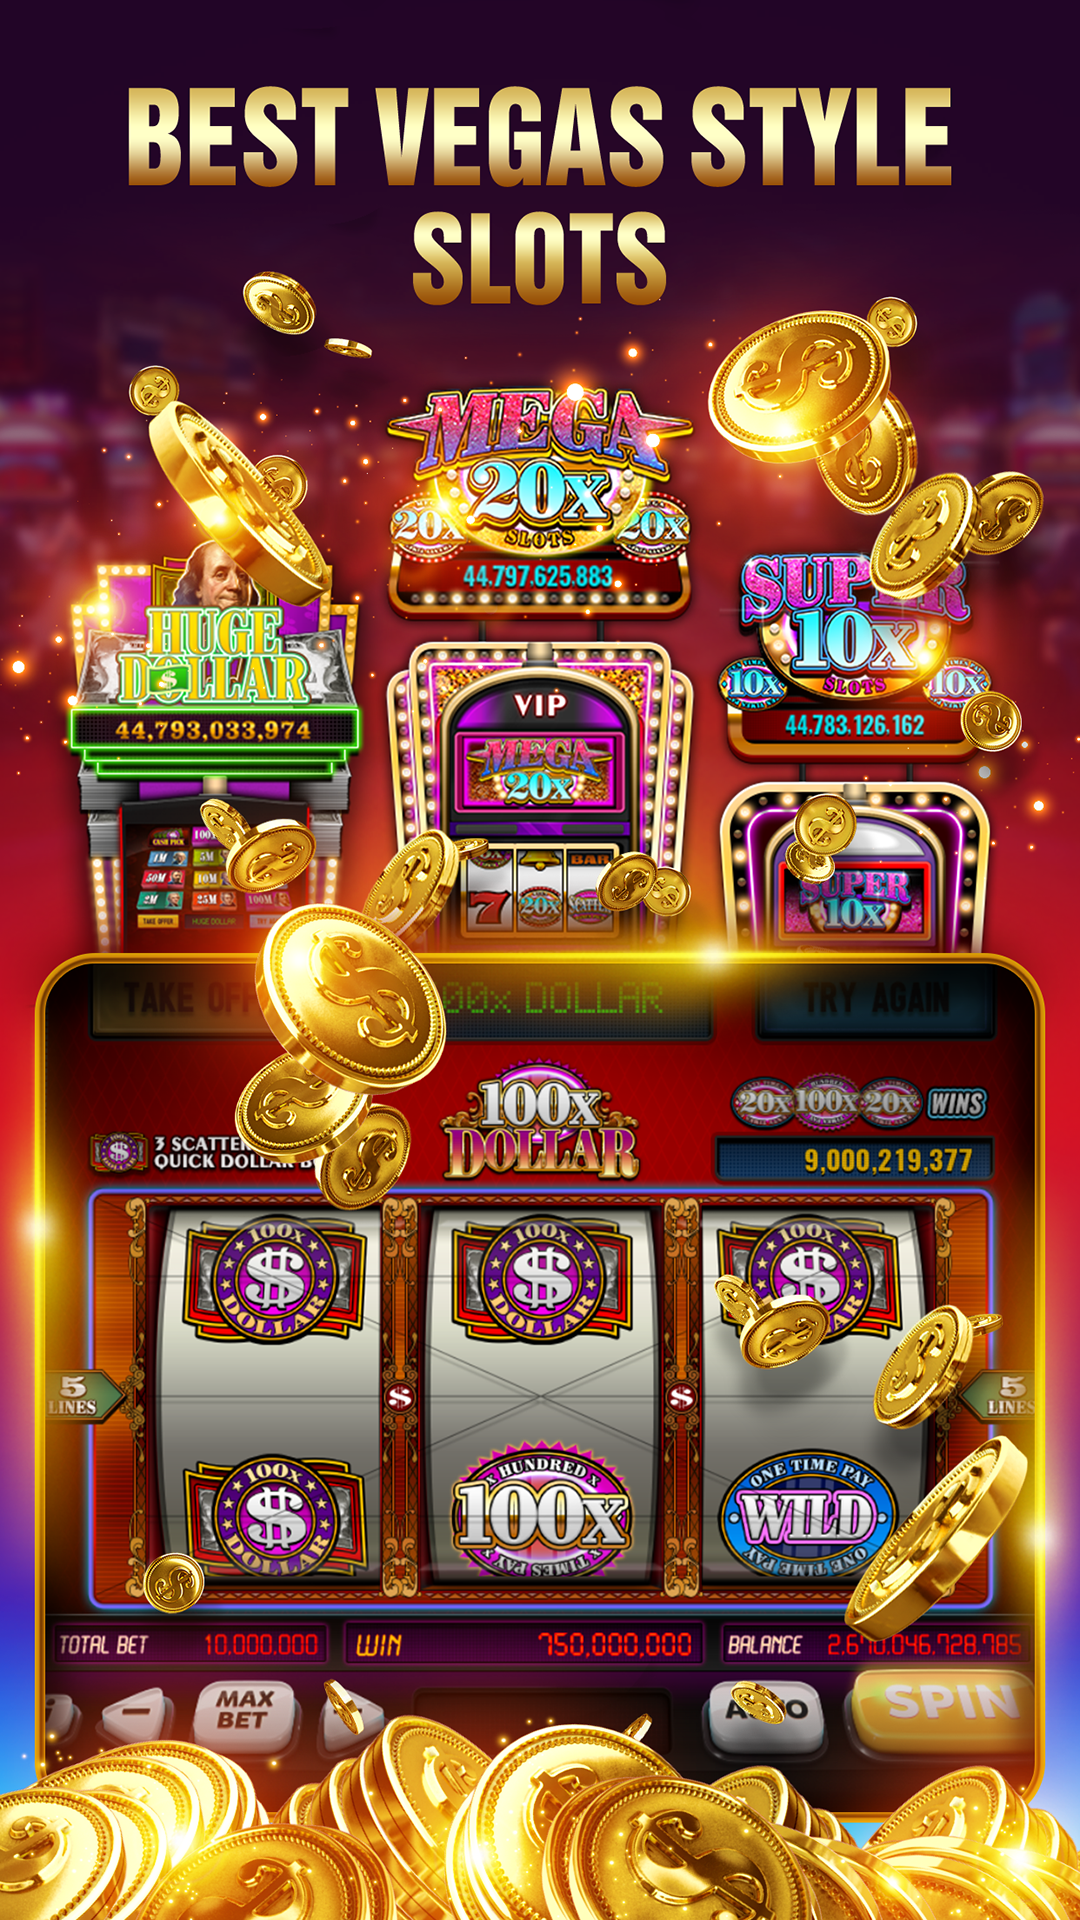 Machina Mobile Slot Gambling